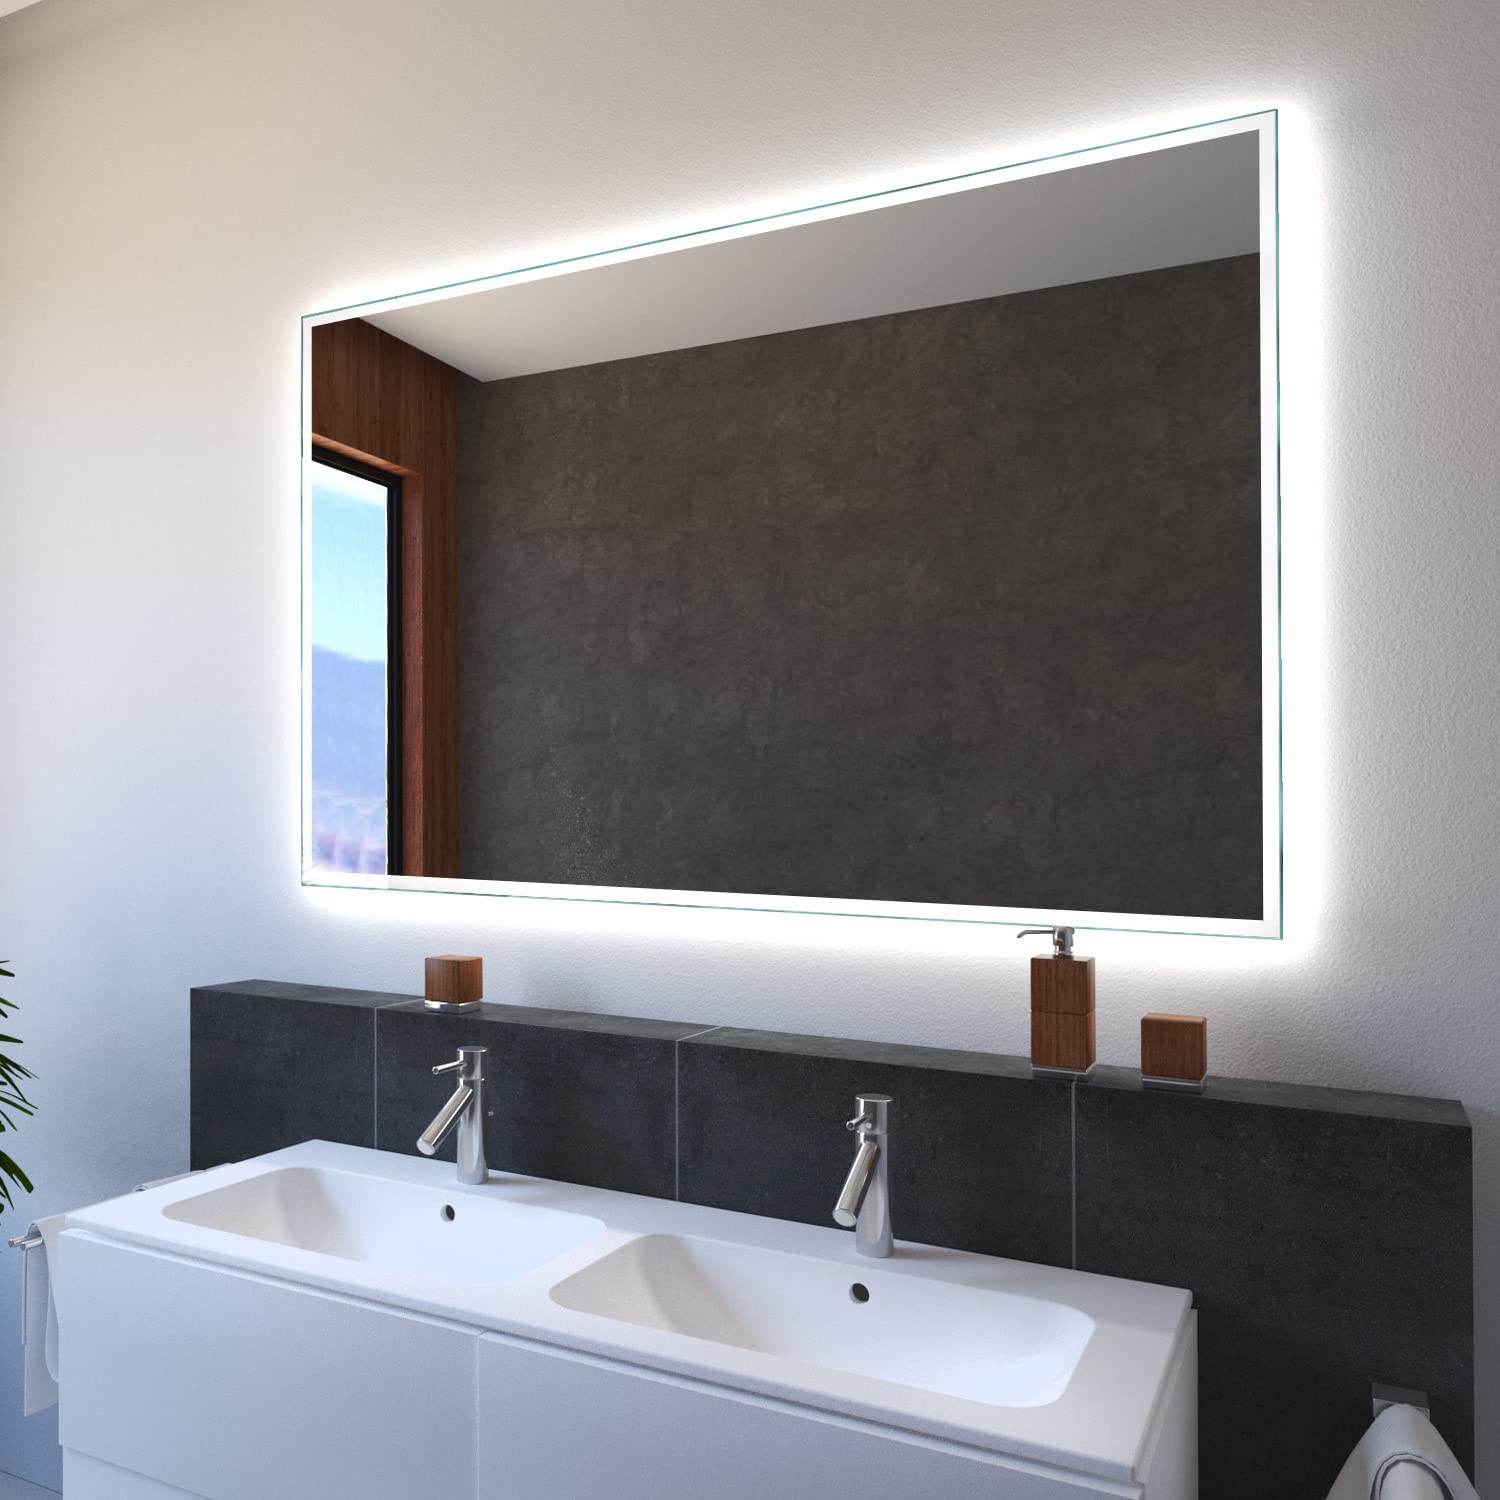 SARAR Wandspiegel mit schmaler rundum LED-Beleuchtung 50x120cm Made in Germany Designo MA4111 Badspiegel Spiegel mit Beleuchtung Badezimmerspiegel nach-auf Maß